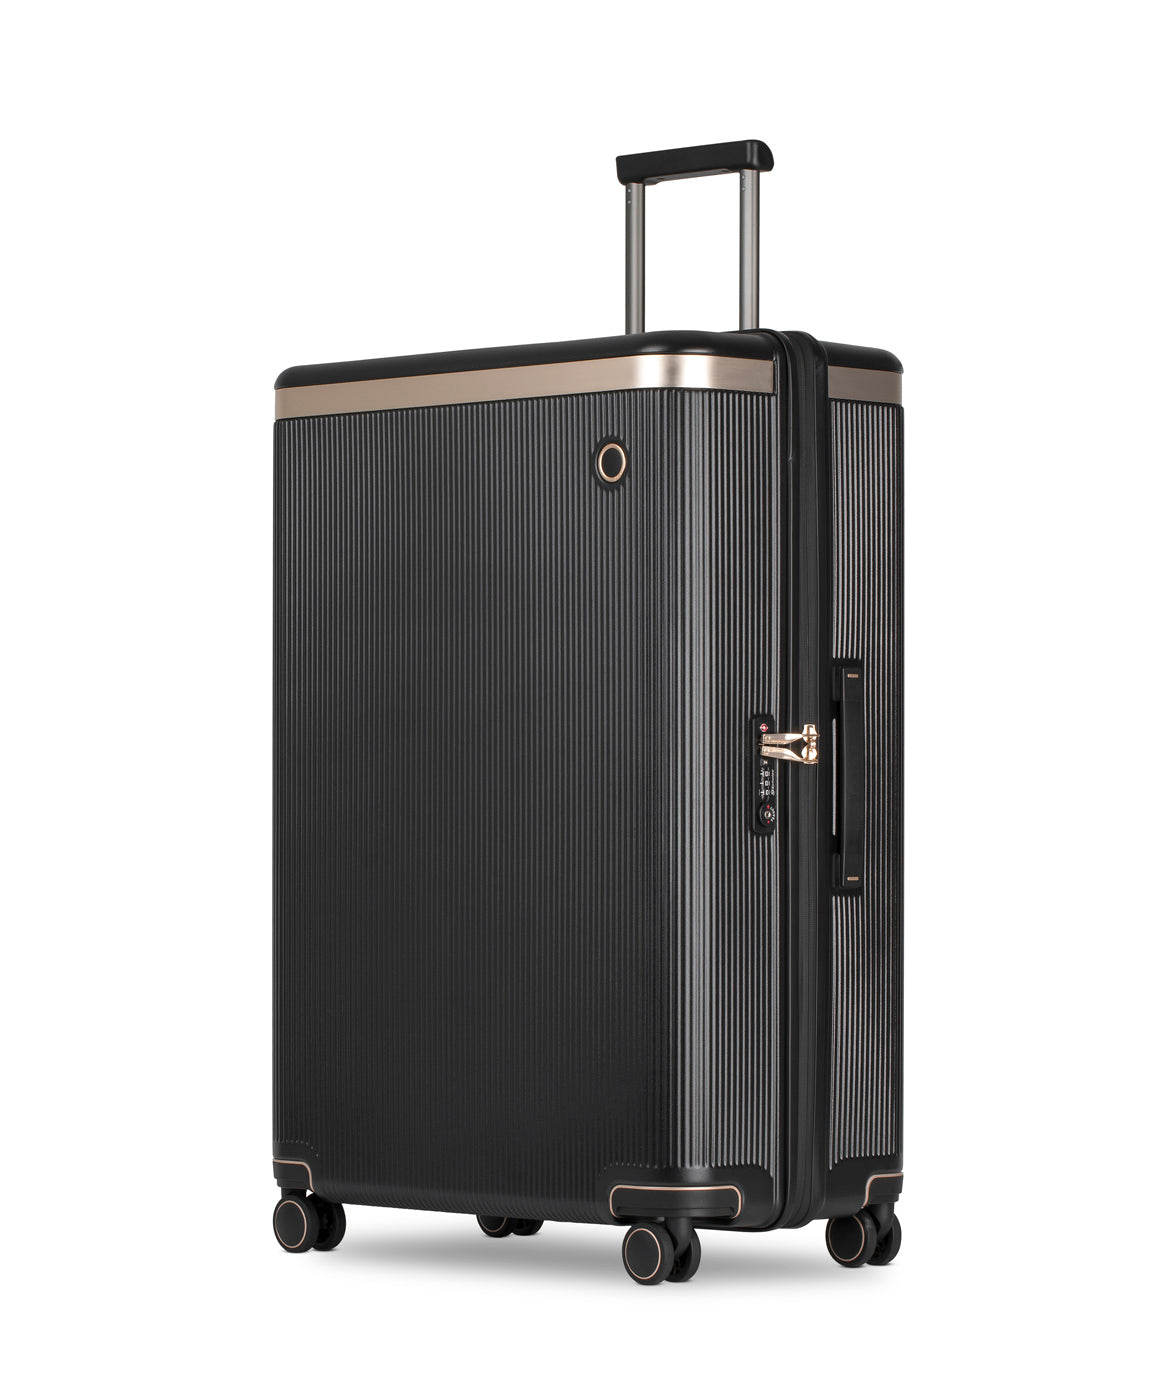 Echolac Dynasty Suitcase, Large 76 cm, Dunkelgrau